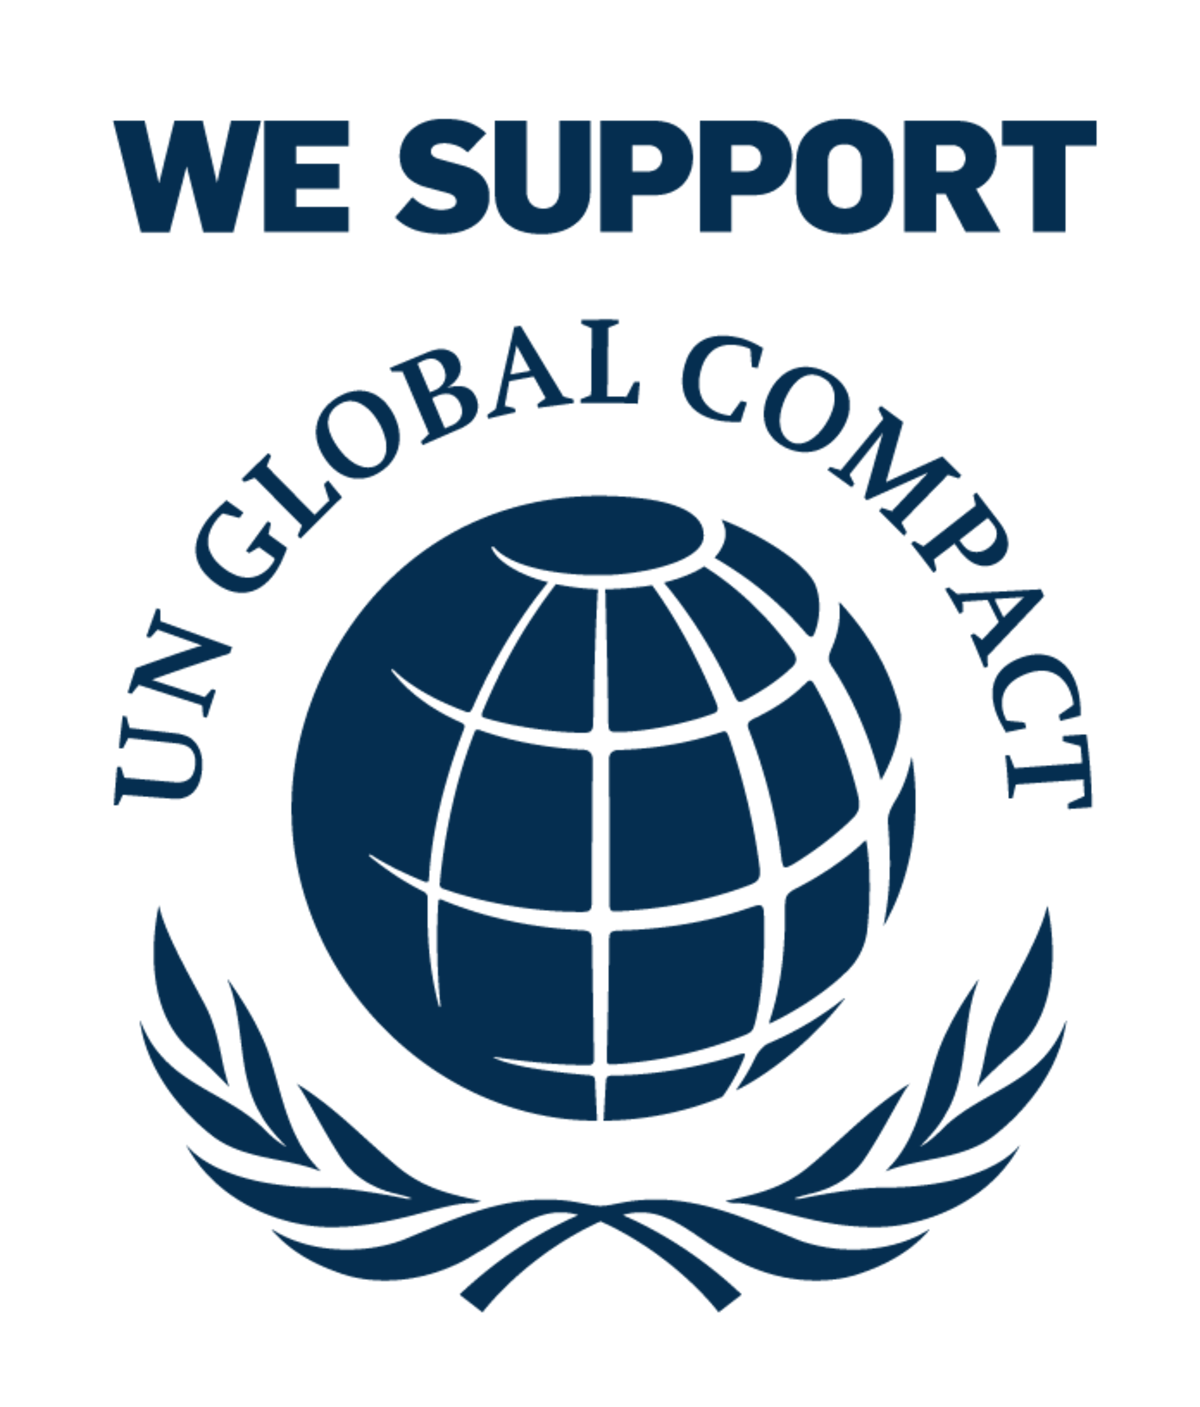 Global Compact Logo